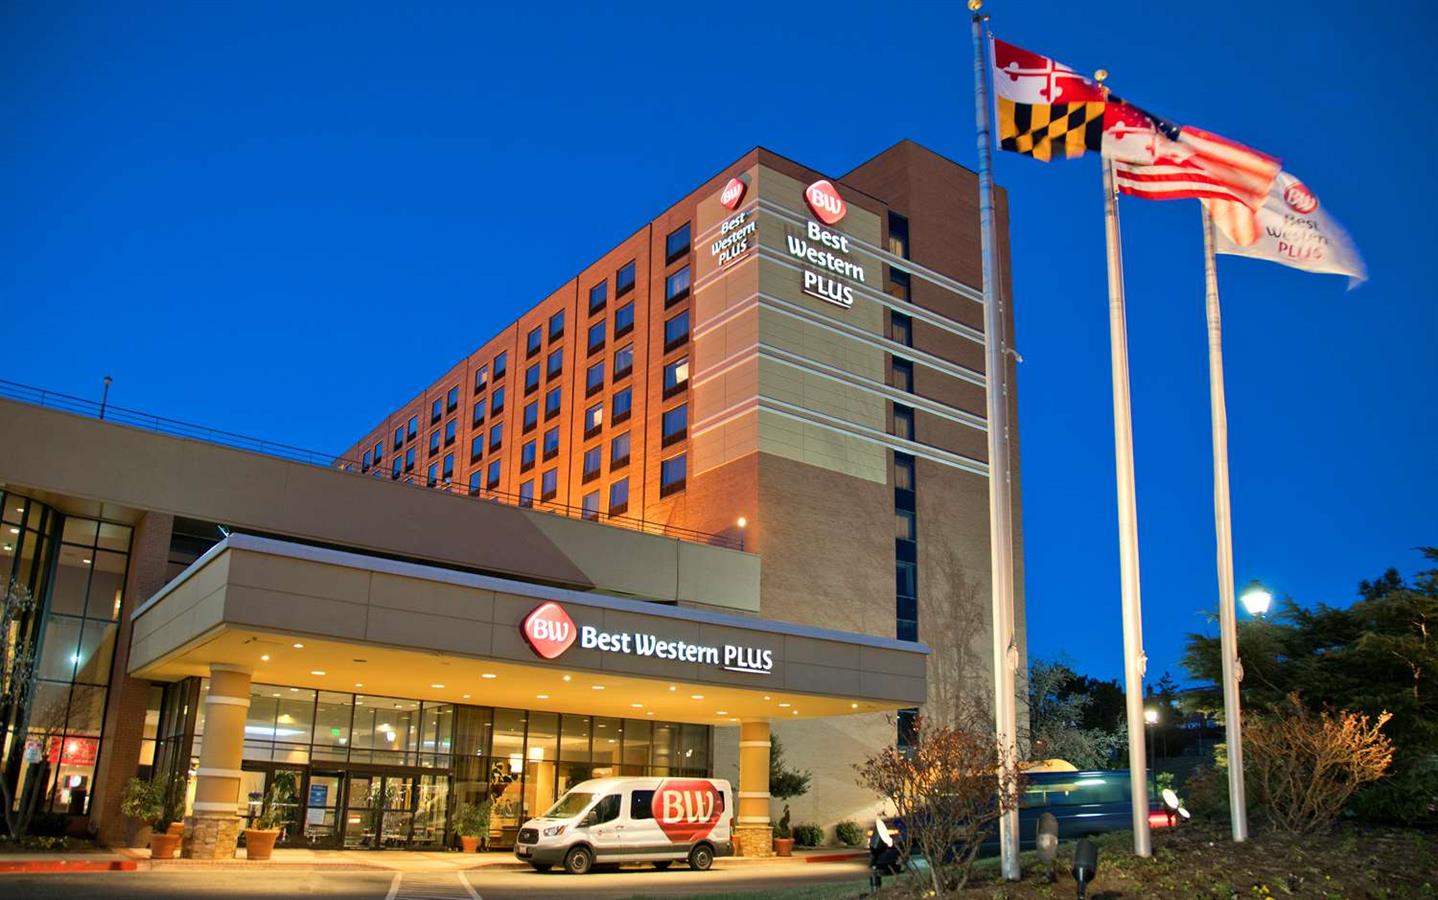 Baltimore hotels: Best Western's exterior